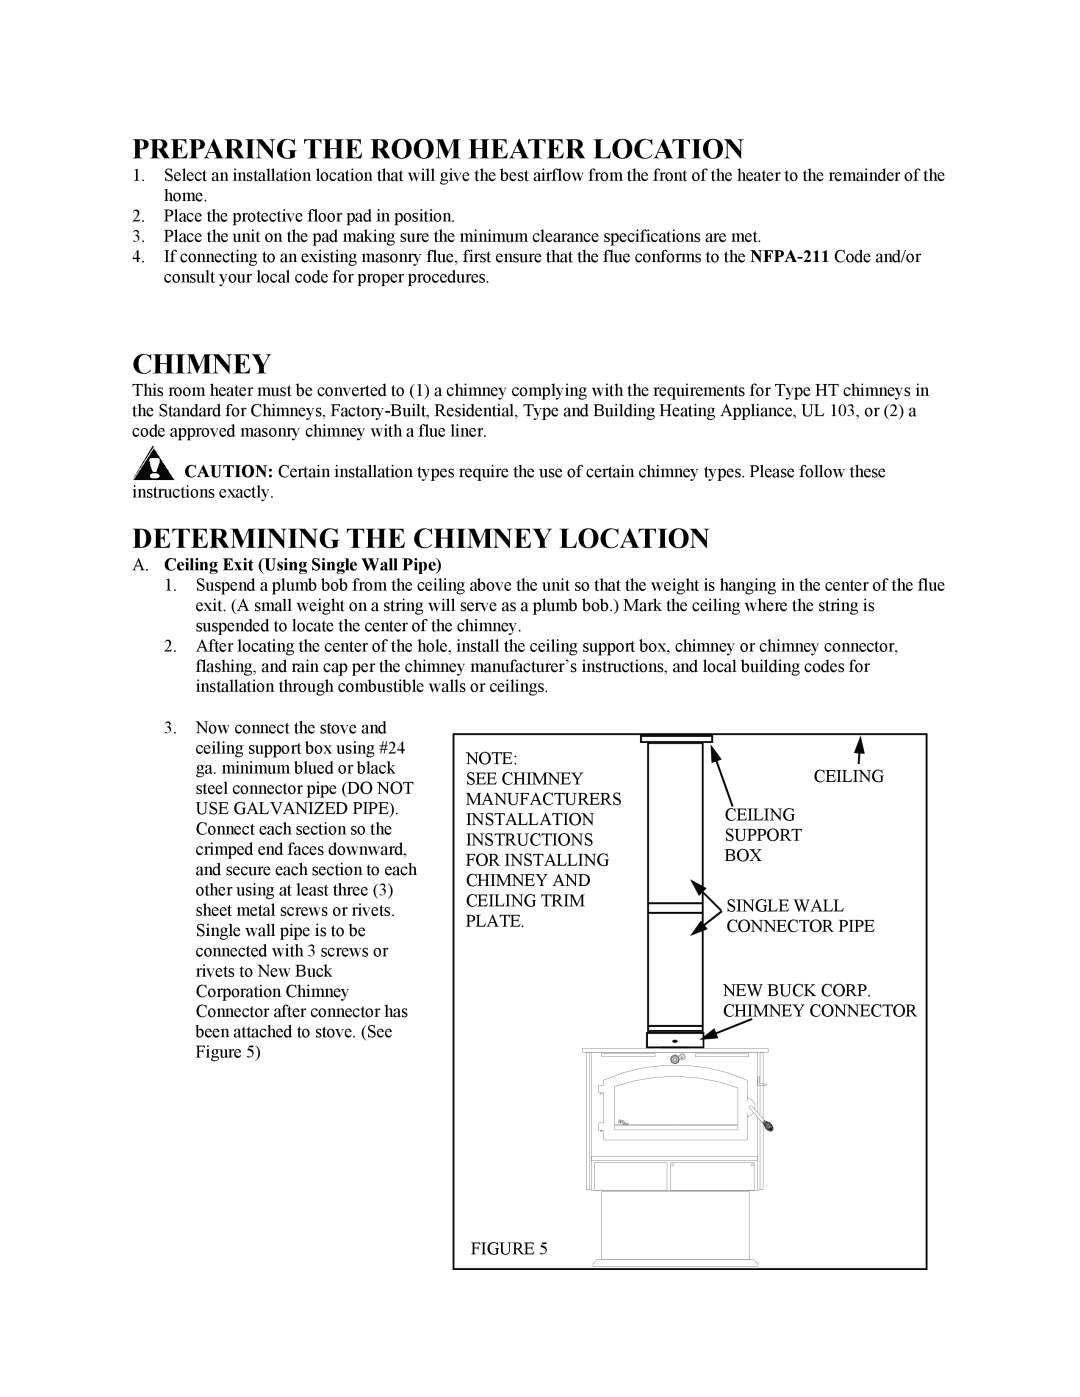 New Buck Corporation 20 Room Heater manual Preparing The Room Heater Location, Determining The Chimney Location 